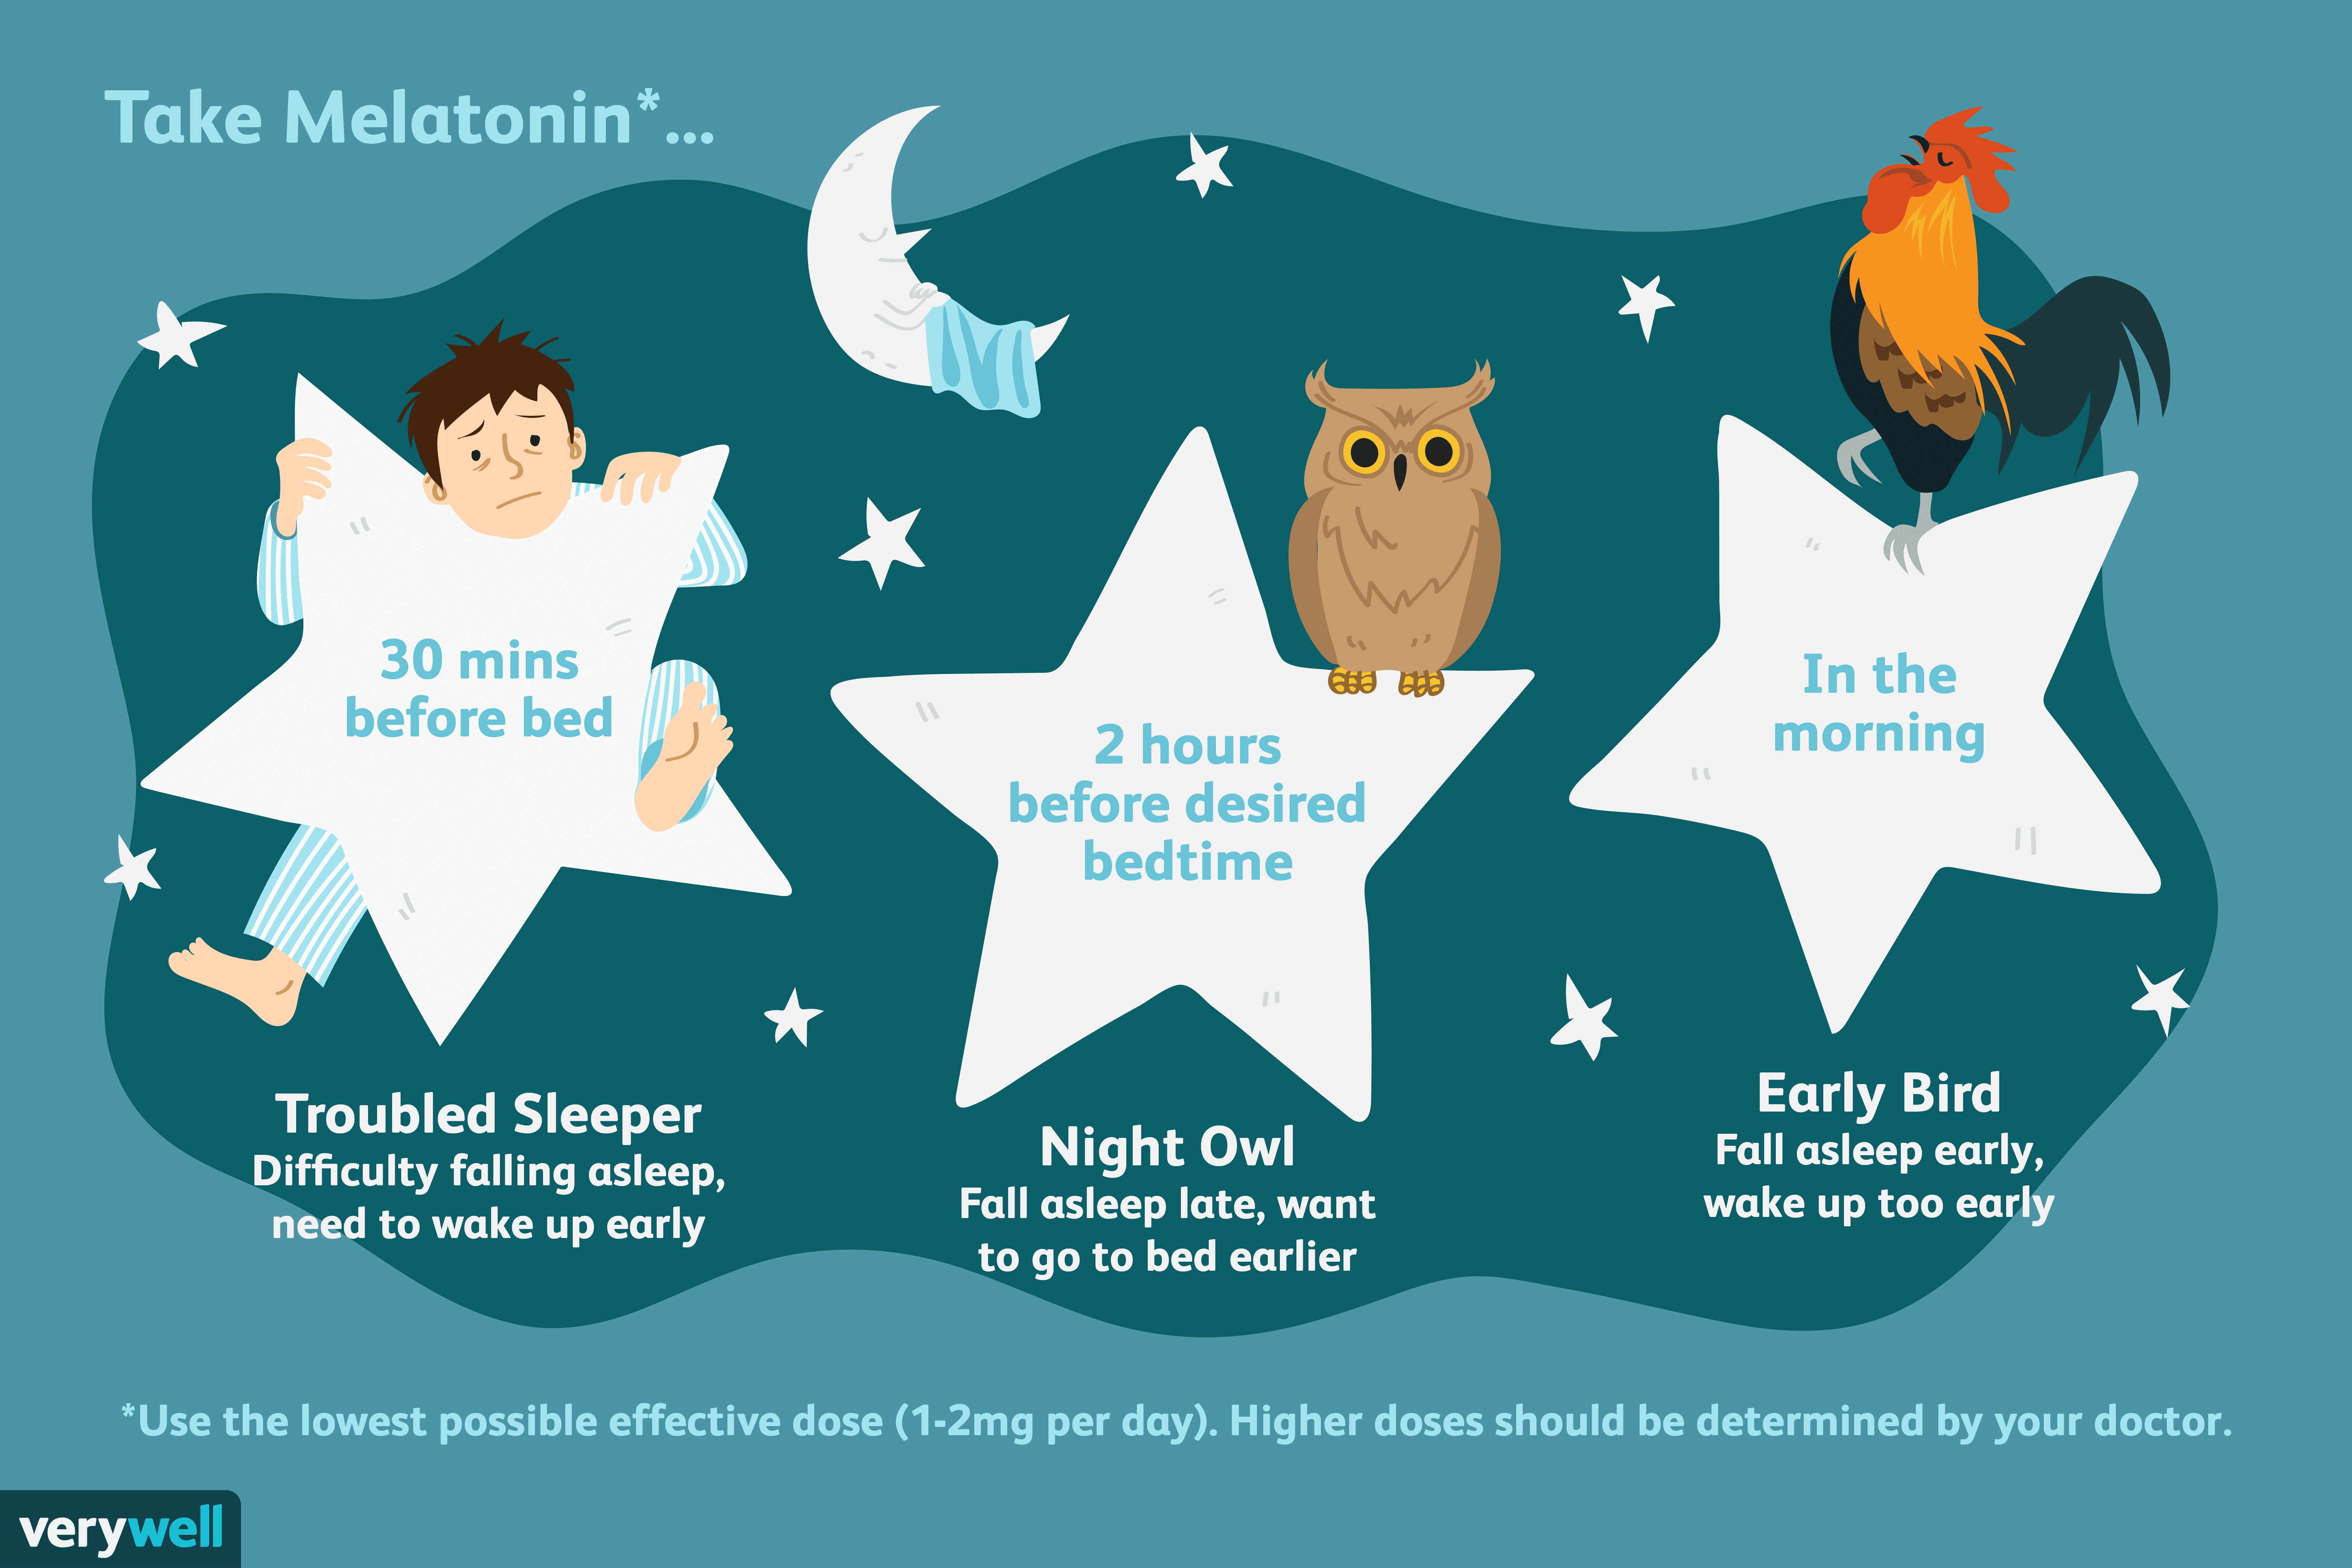 Melatonin Sleep How Long Does It Last and What Are the Benefits 216275 1 - Melatonin Sleep: How Long Does It Last, and What Are the Benefits?